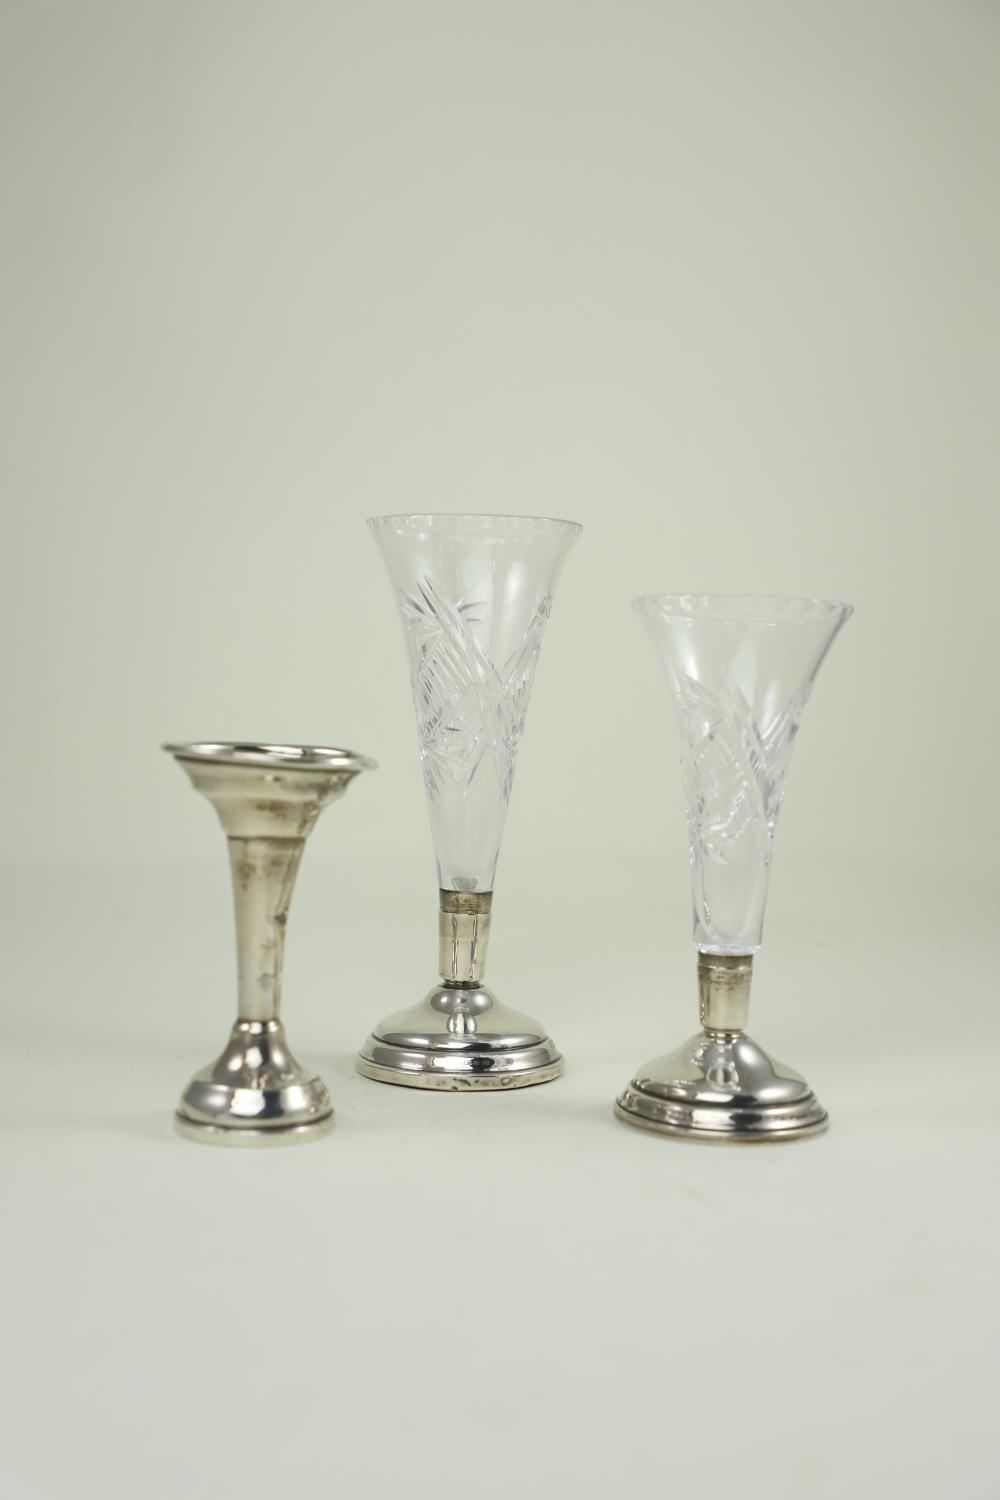 Two silver & glass vases, maker B & Co, Birmingham 1961, tallest 19cm high, glass stalks removable, 